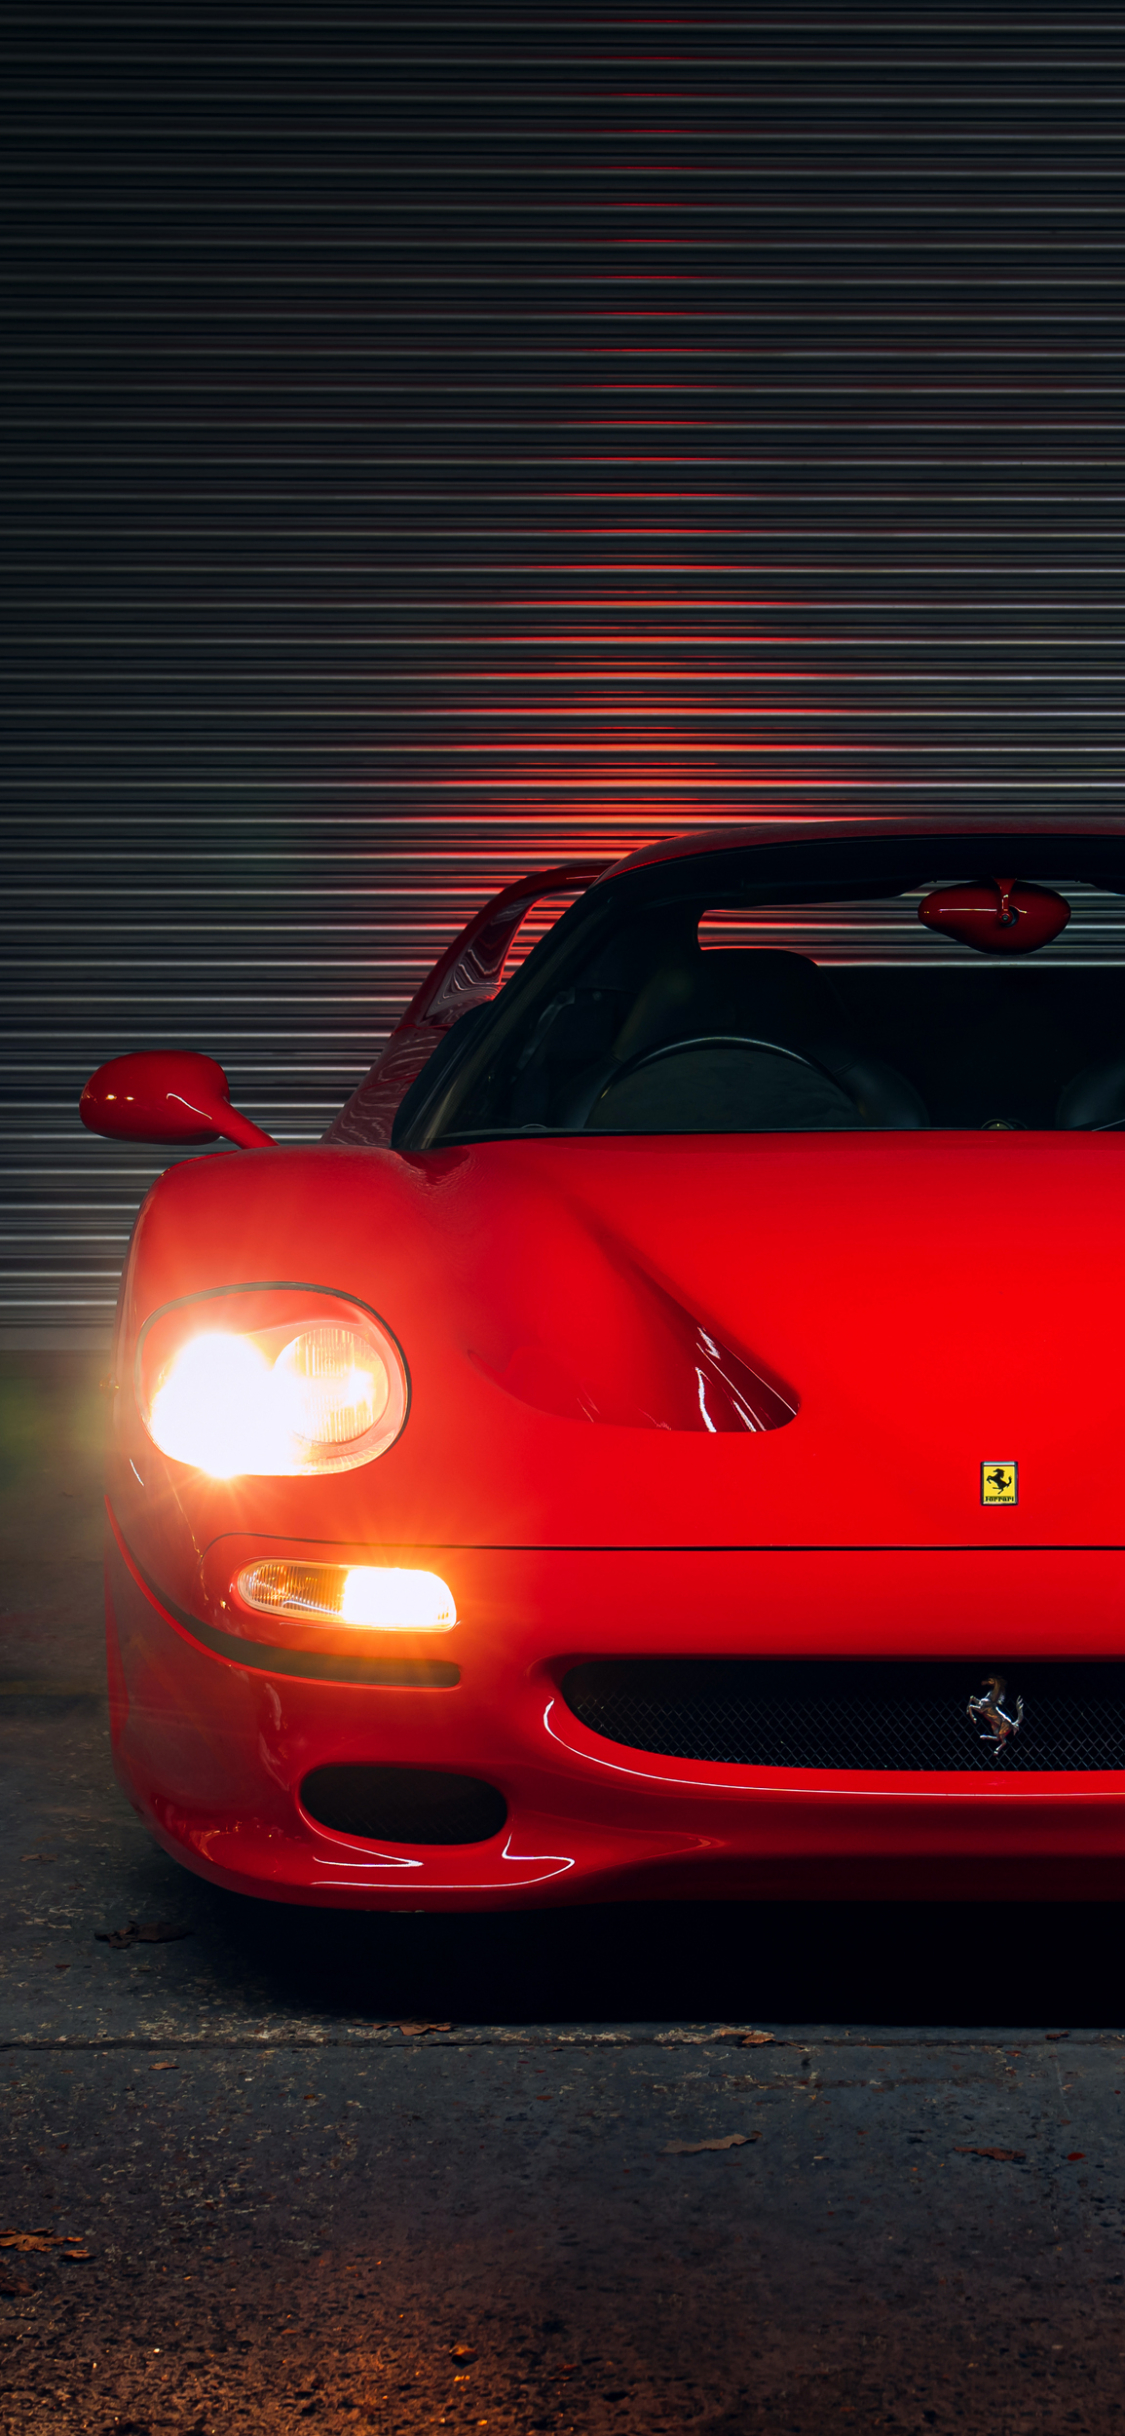 Ferrari F50 Phone Wallpaper